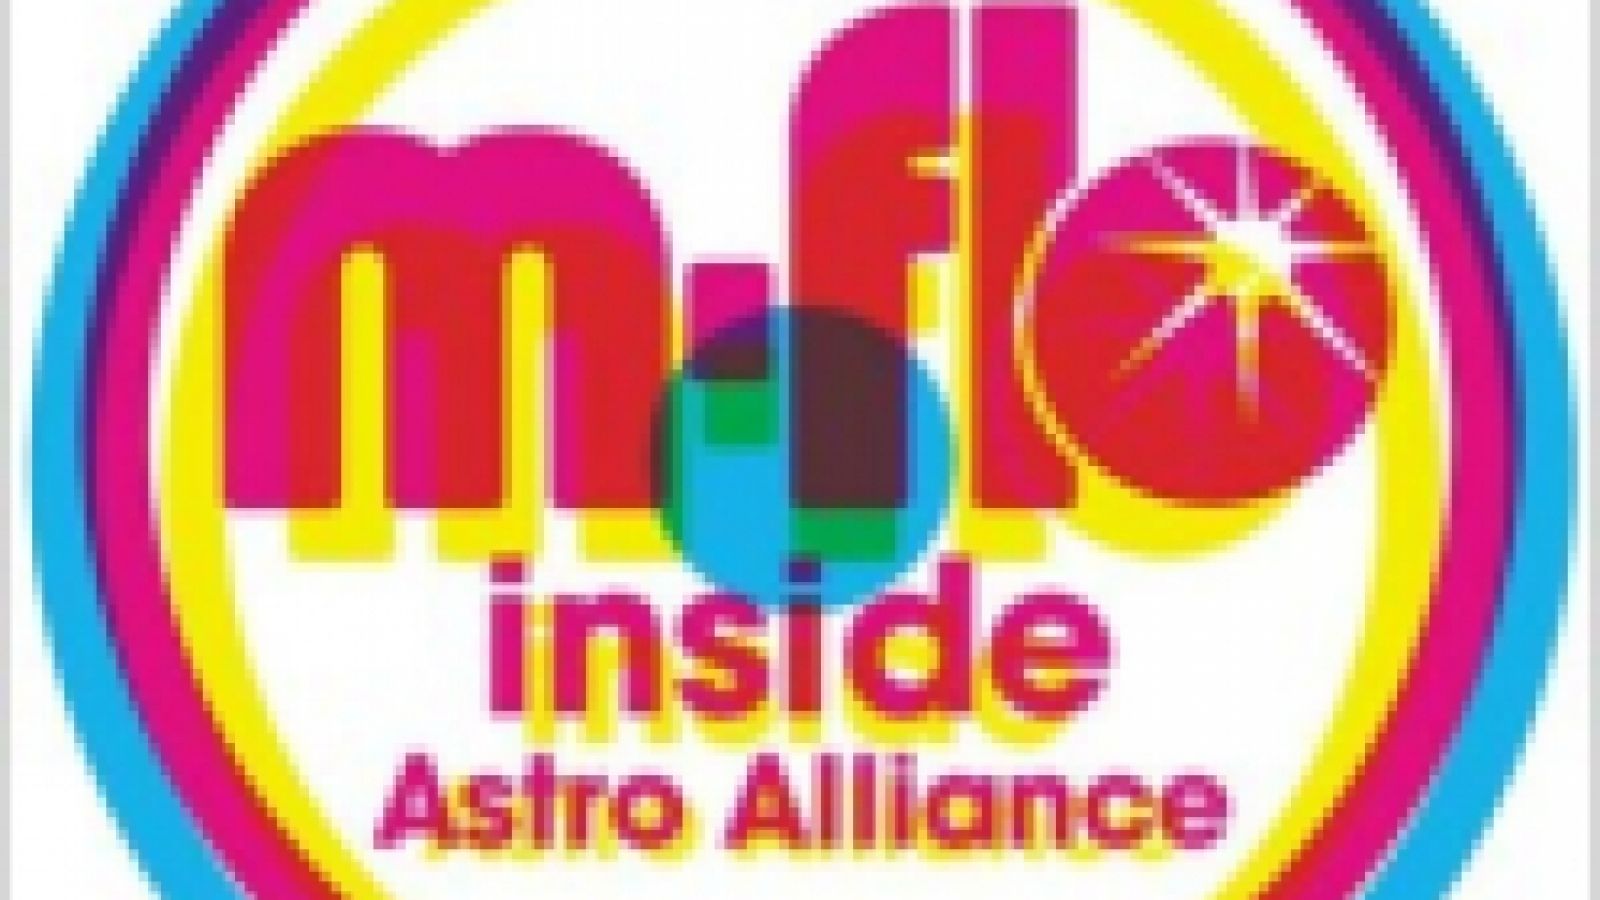 m-flo - inside (Astro Alliance) © Avex Entertainment Inc.